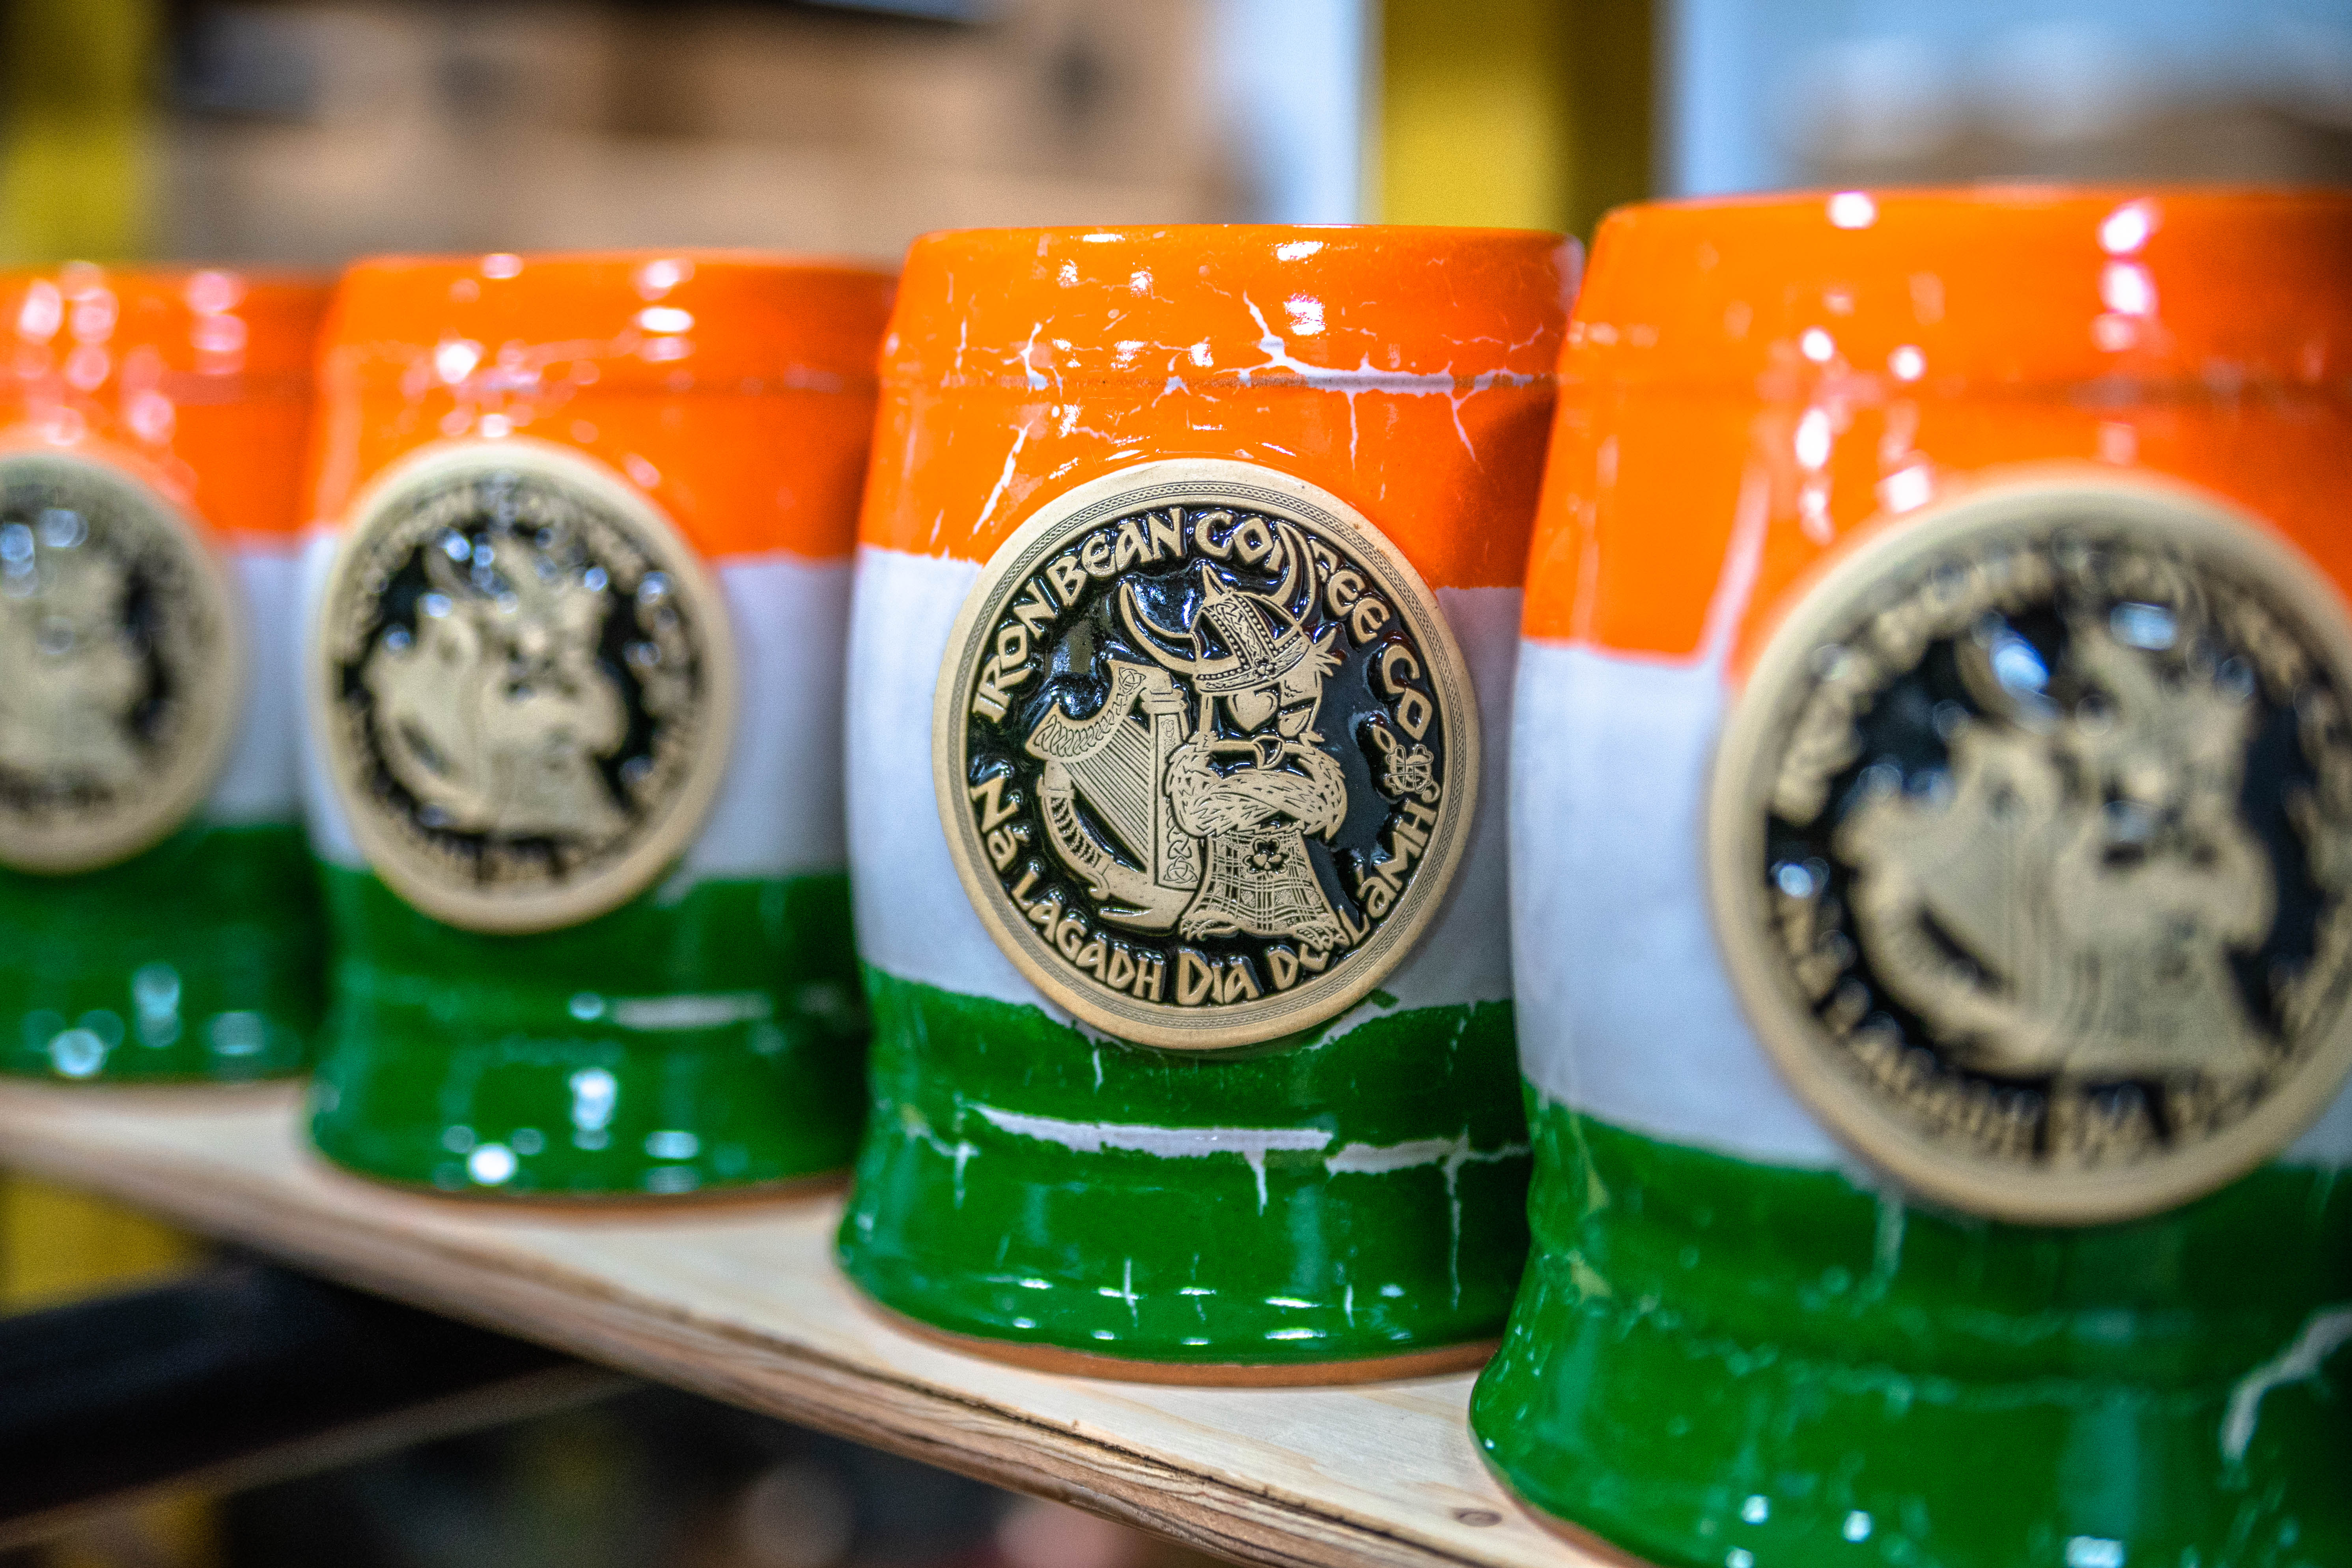 Iron Bean coffee mug for St. Patrick's Day